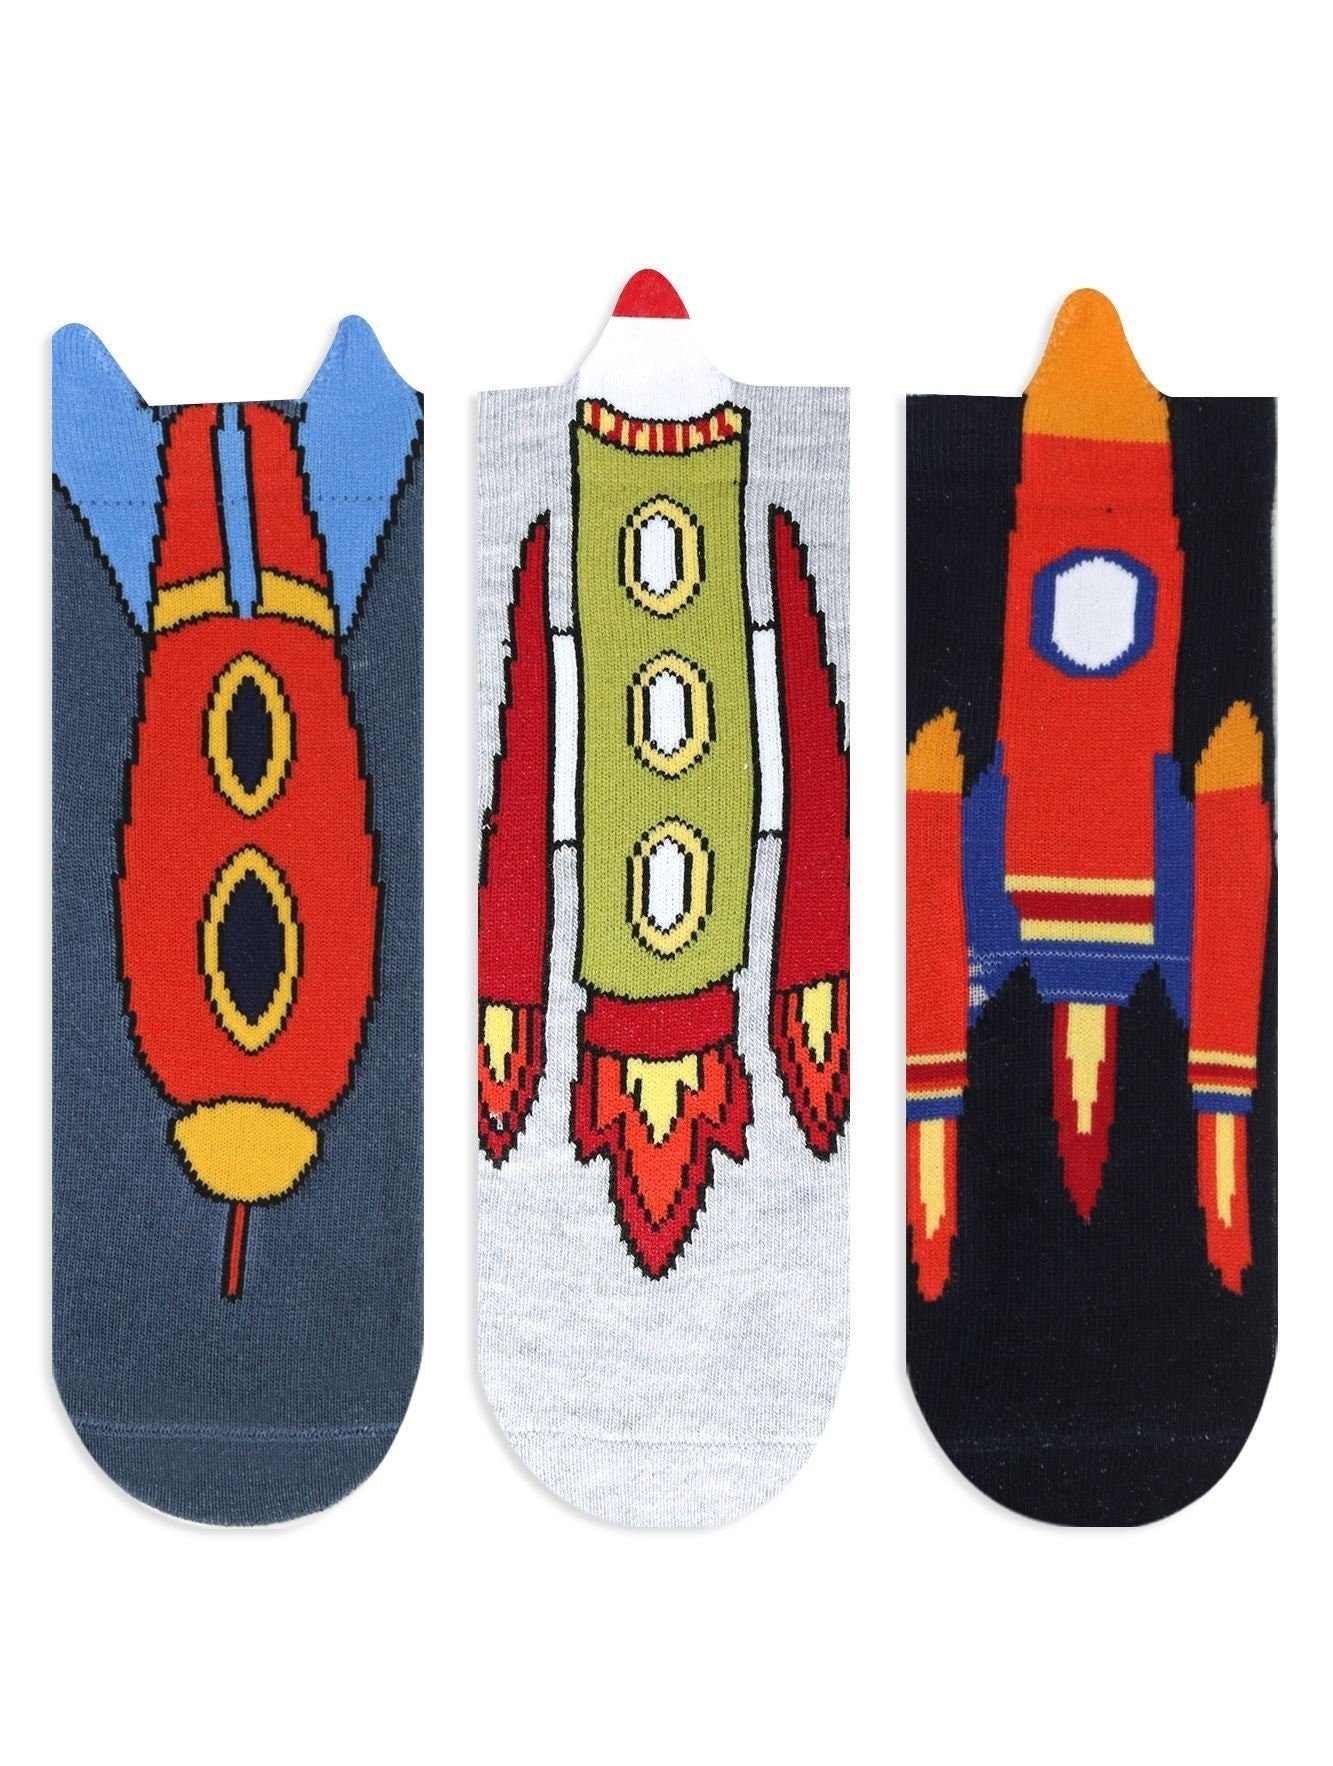 3D Space, Rocket Socks, Rocket Ship Space Novelty Socks, Silly Socks, Socks For 5-7, 7-9 Years Old, Back To School, Advent Calendar Fillers